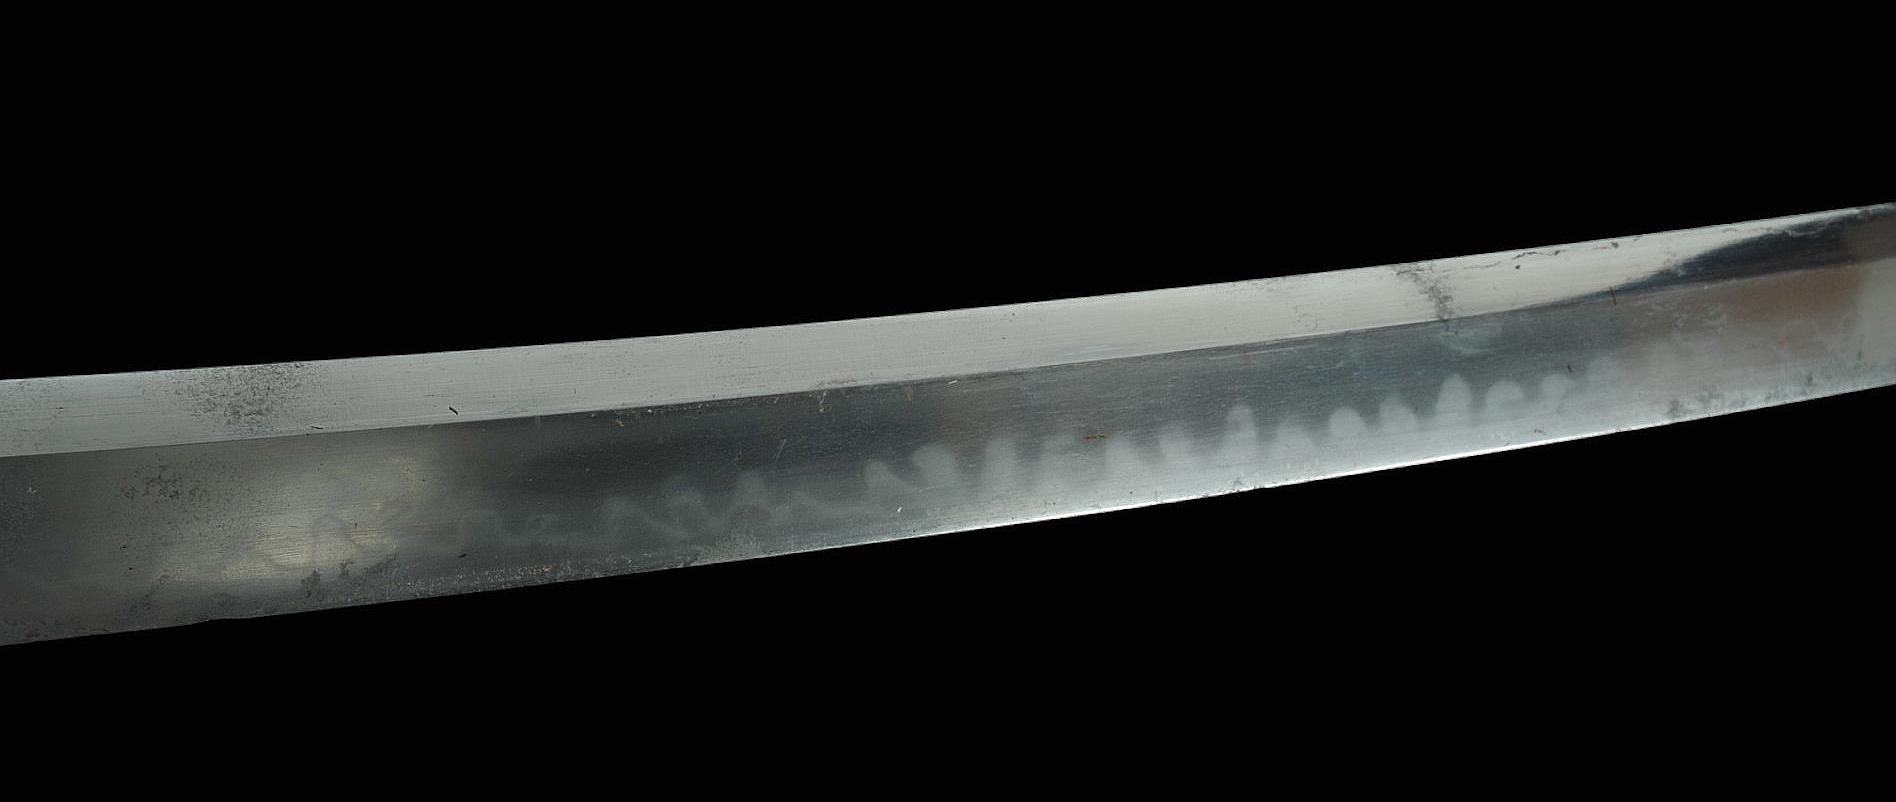 Japanese Katana Samurai Sword, 1800's vintage (MGX)